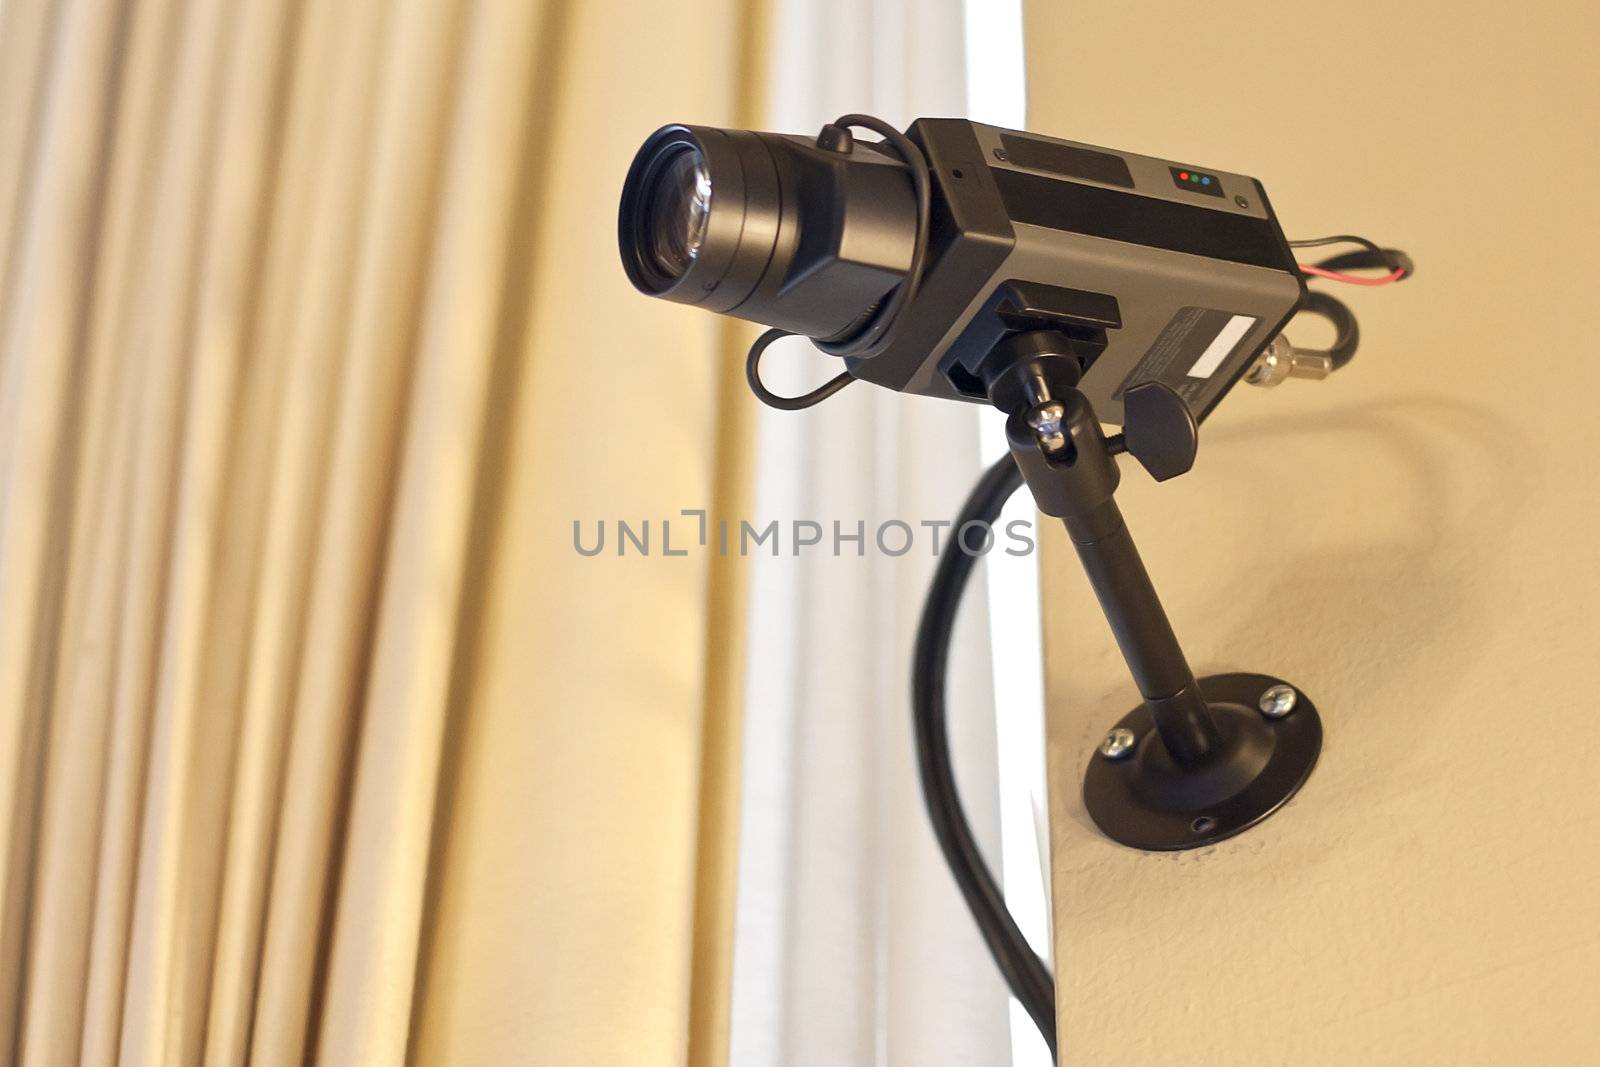 A security camera records inside a building